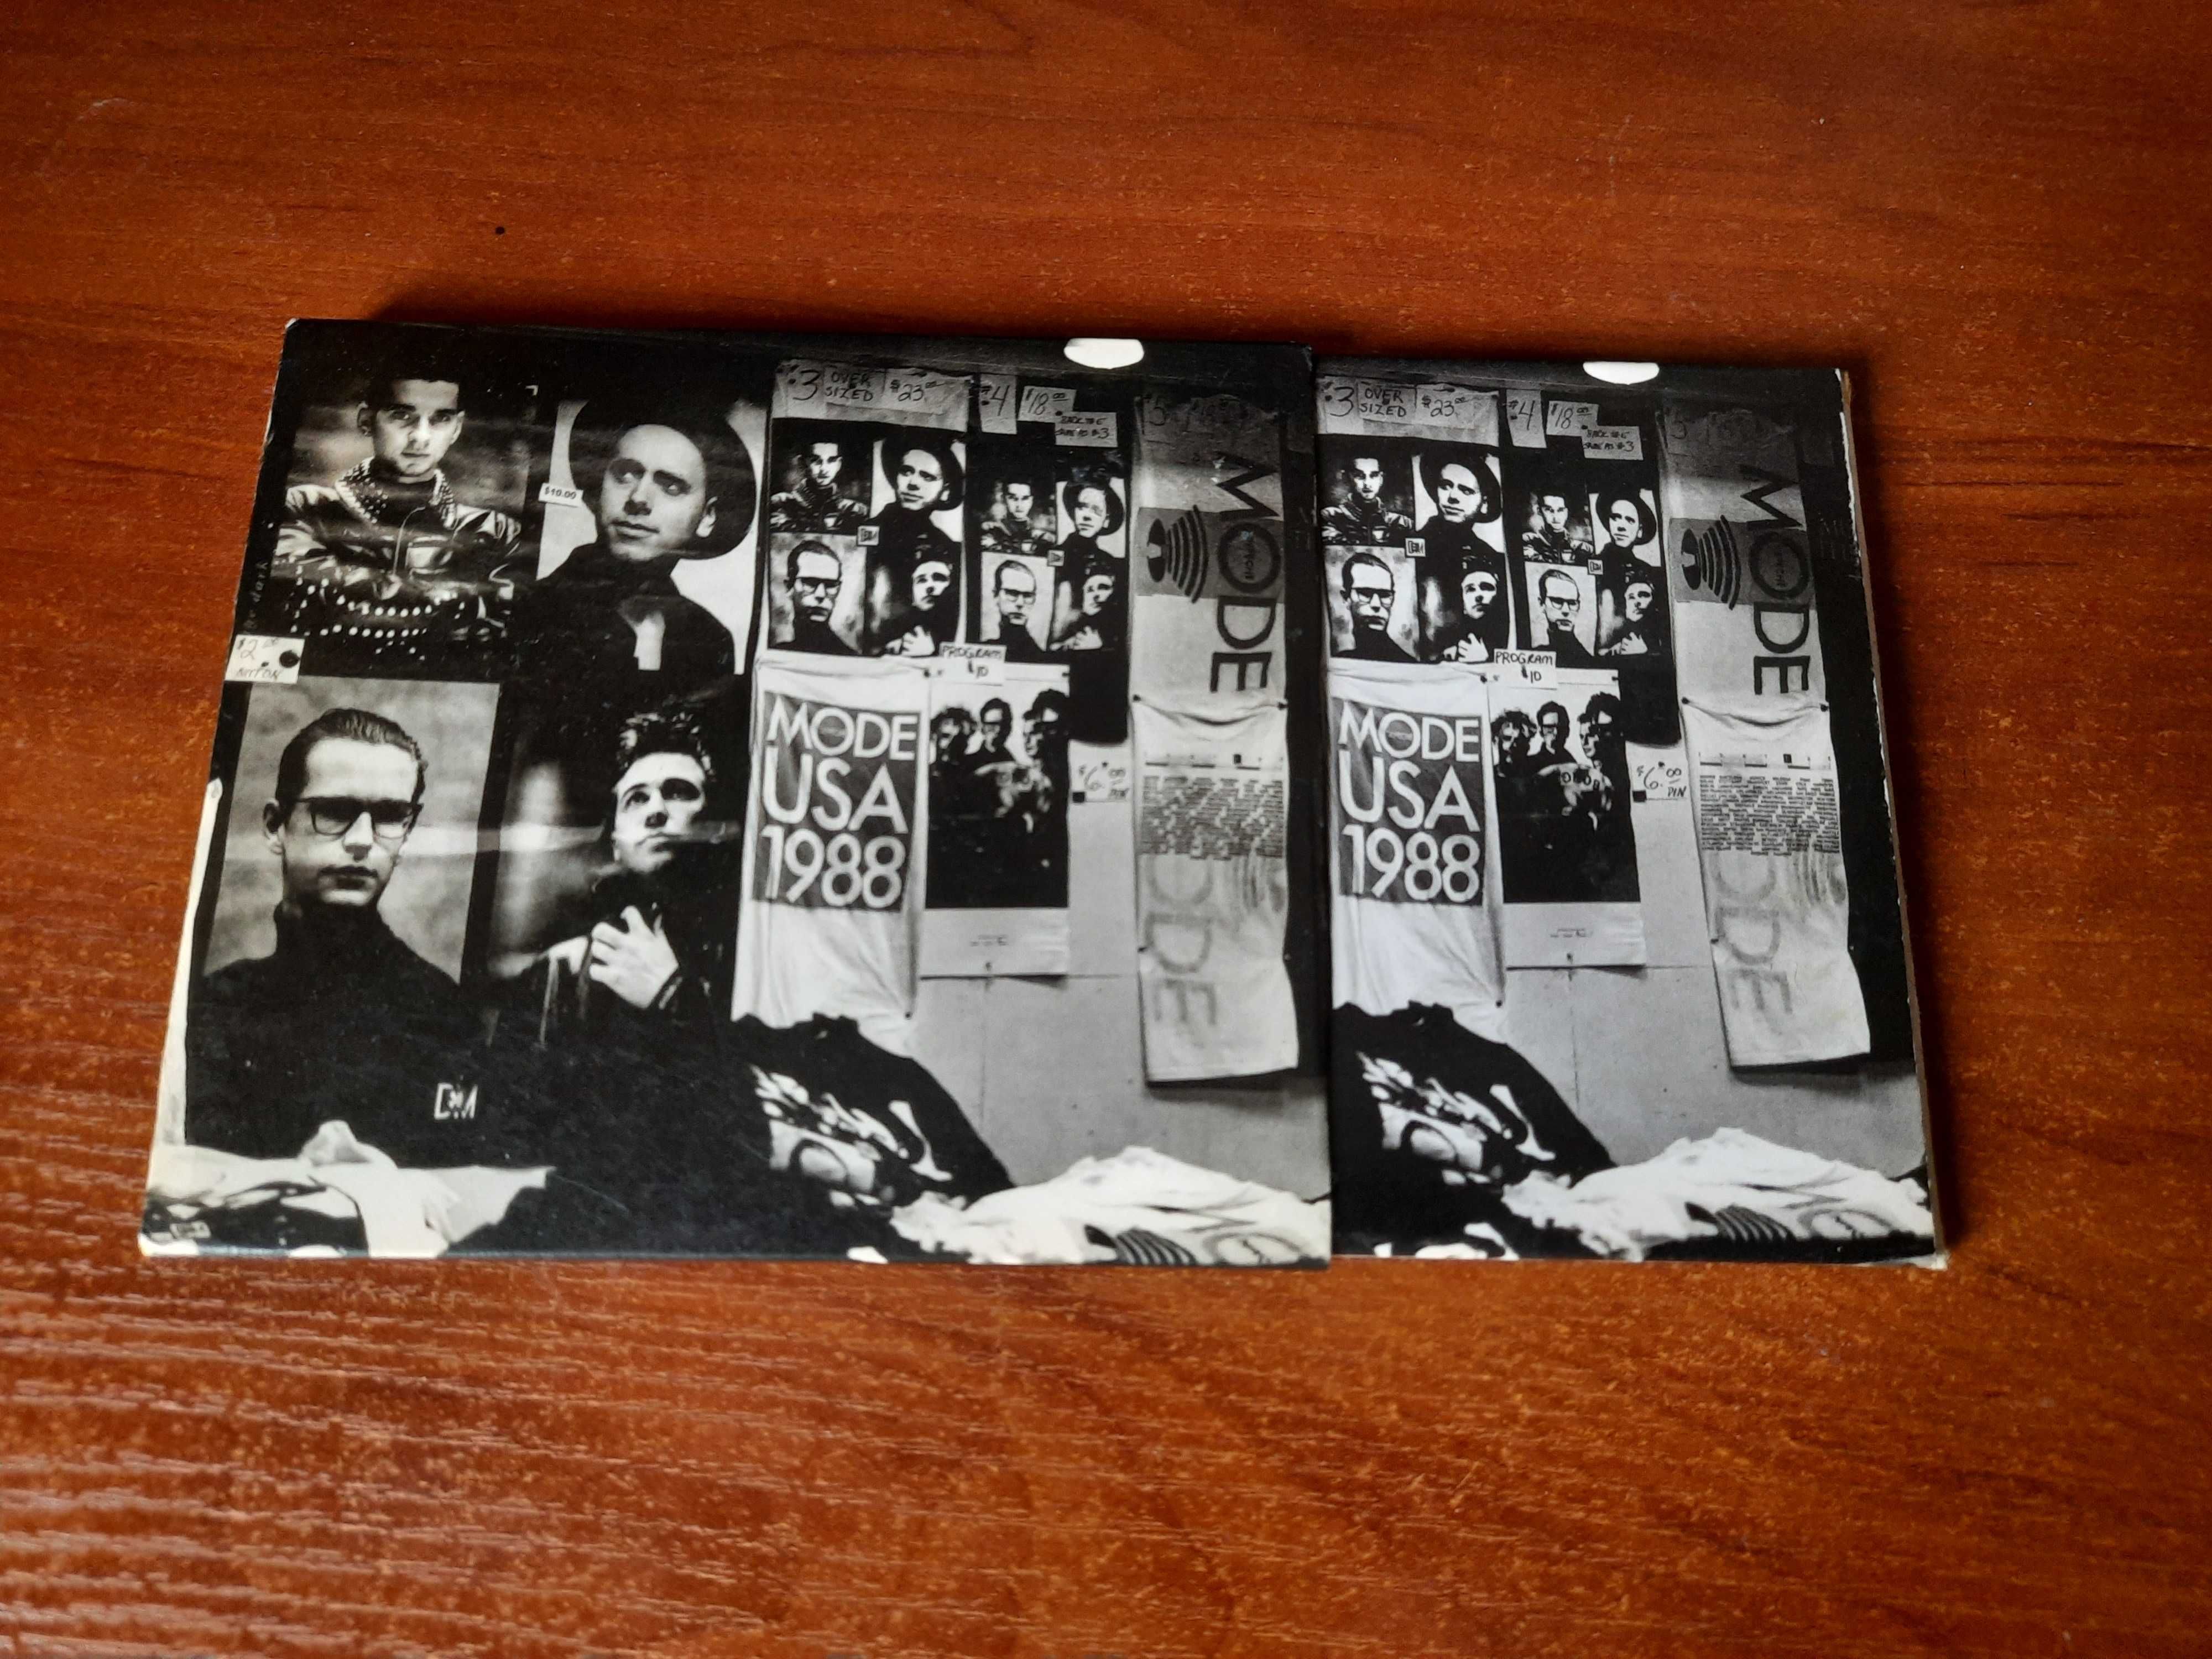 Audio CD Depeche Mode - 101 (2 CD,UK)